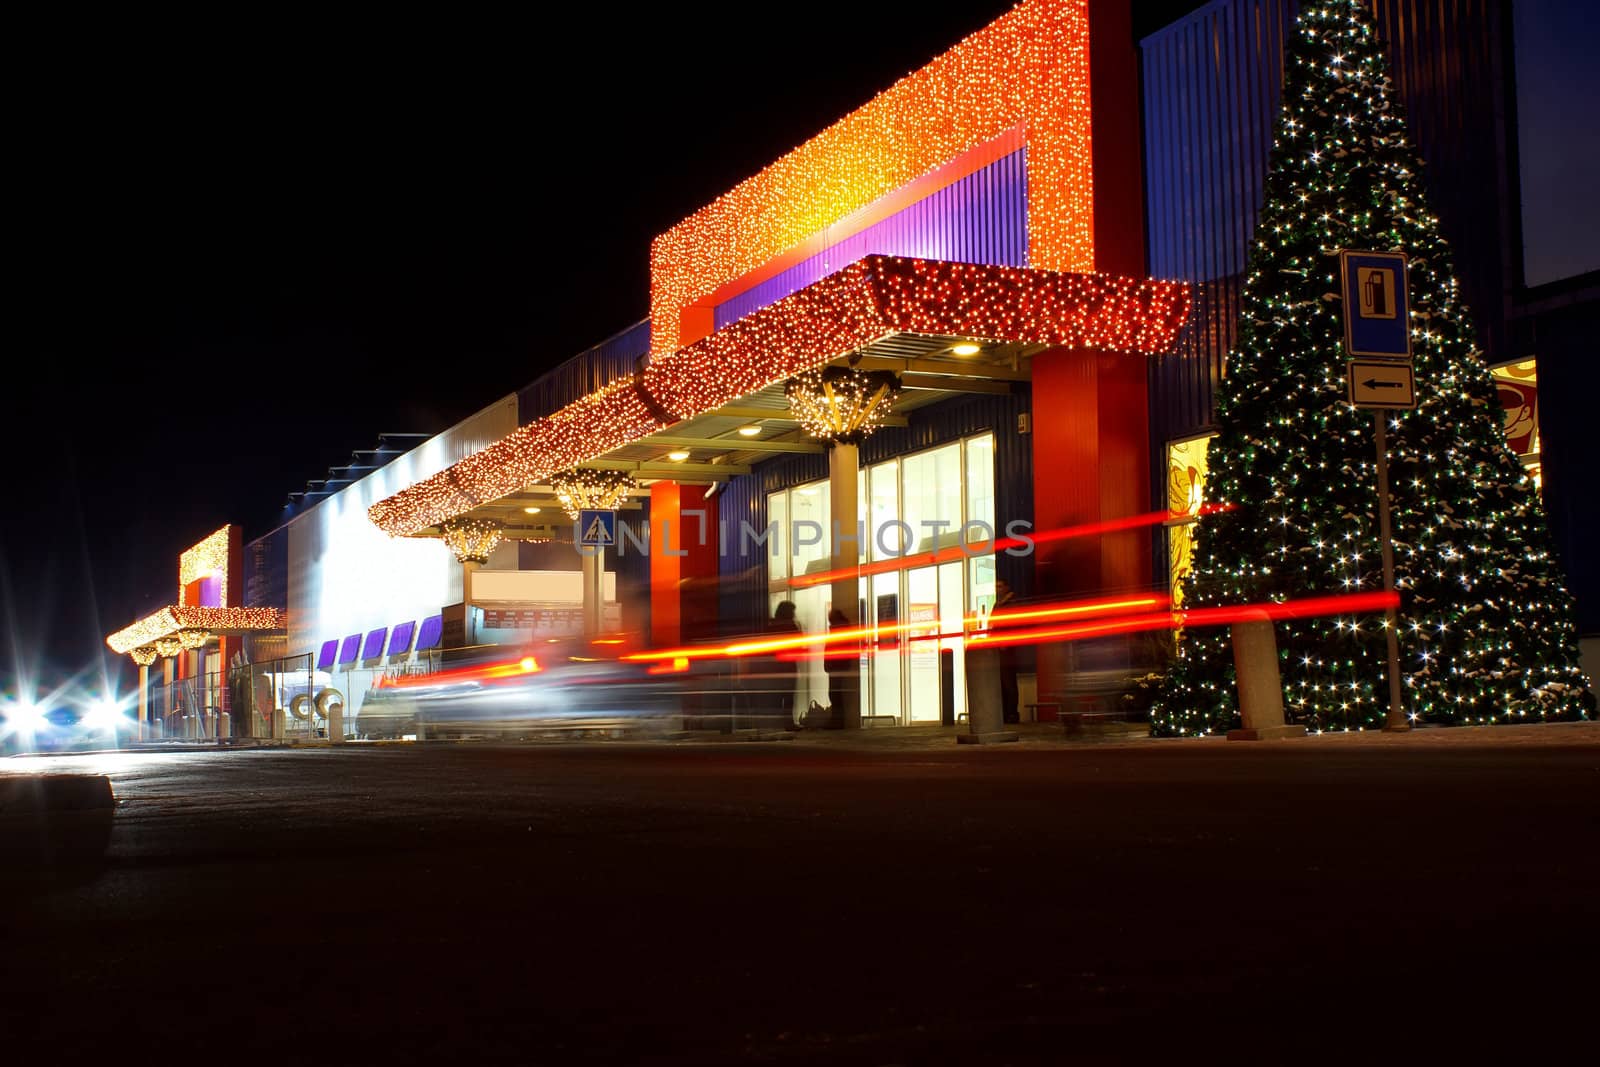 Christmas decorated shopping center, Jihlava Czech Republic by artush